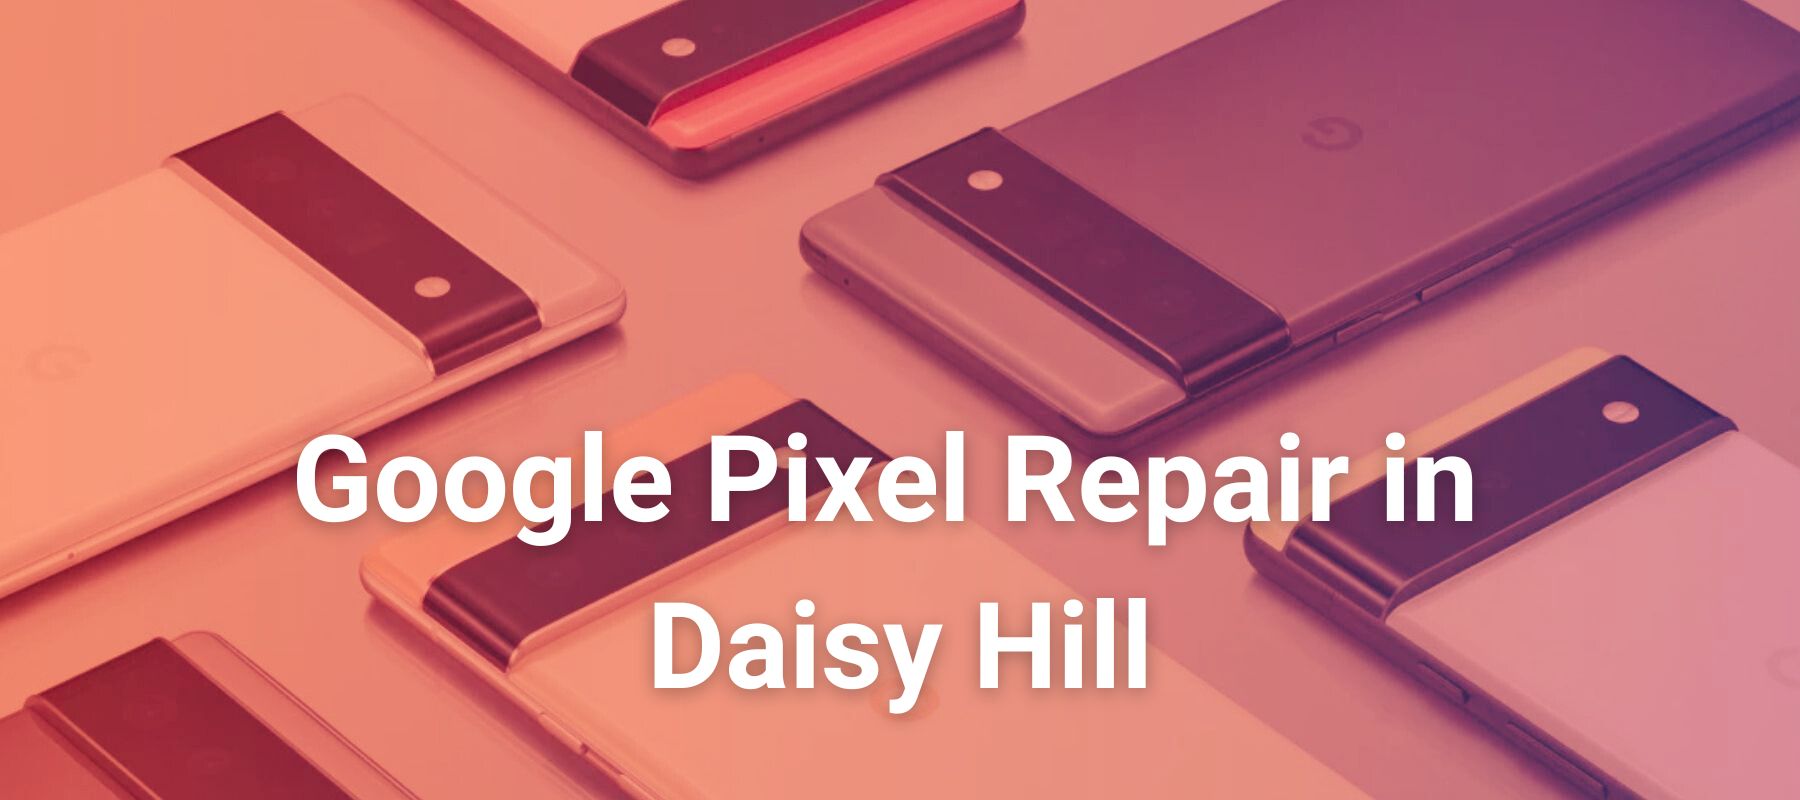 Google Pixel Repair in Daisy Hill